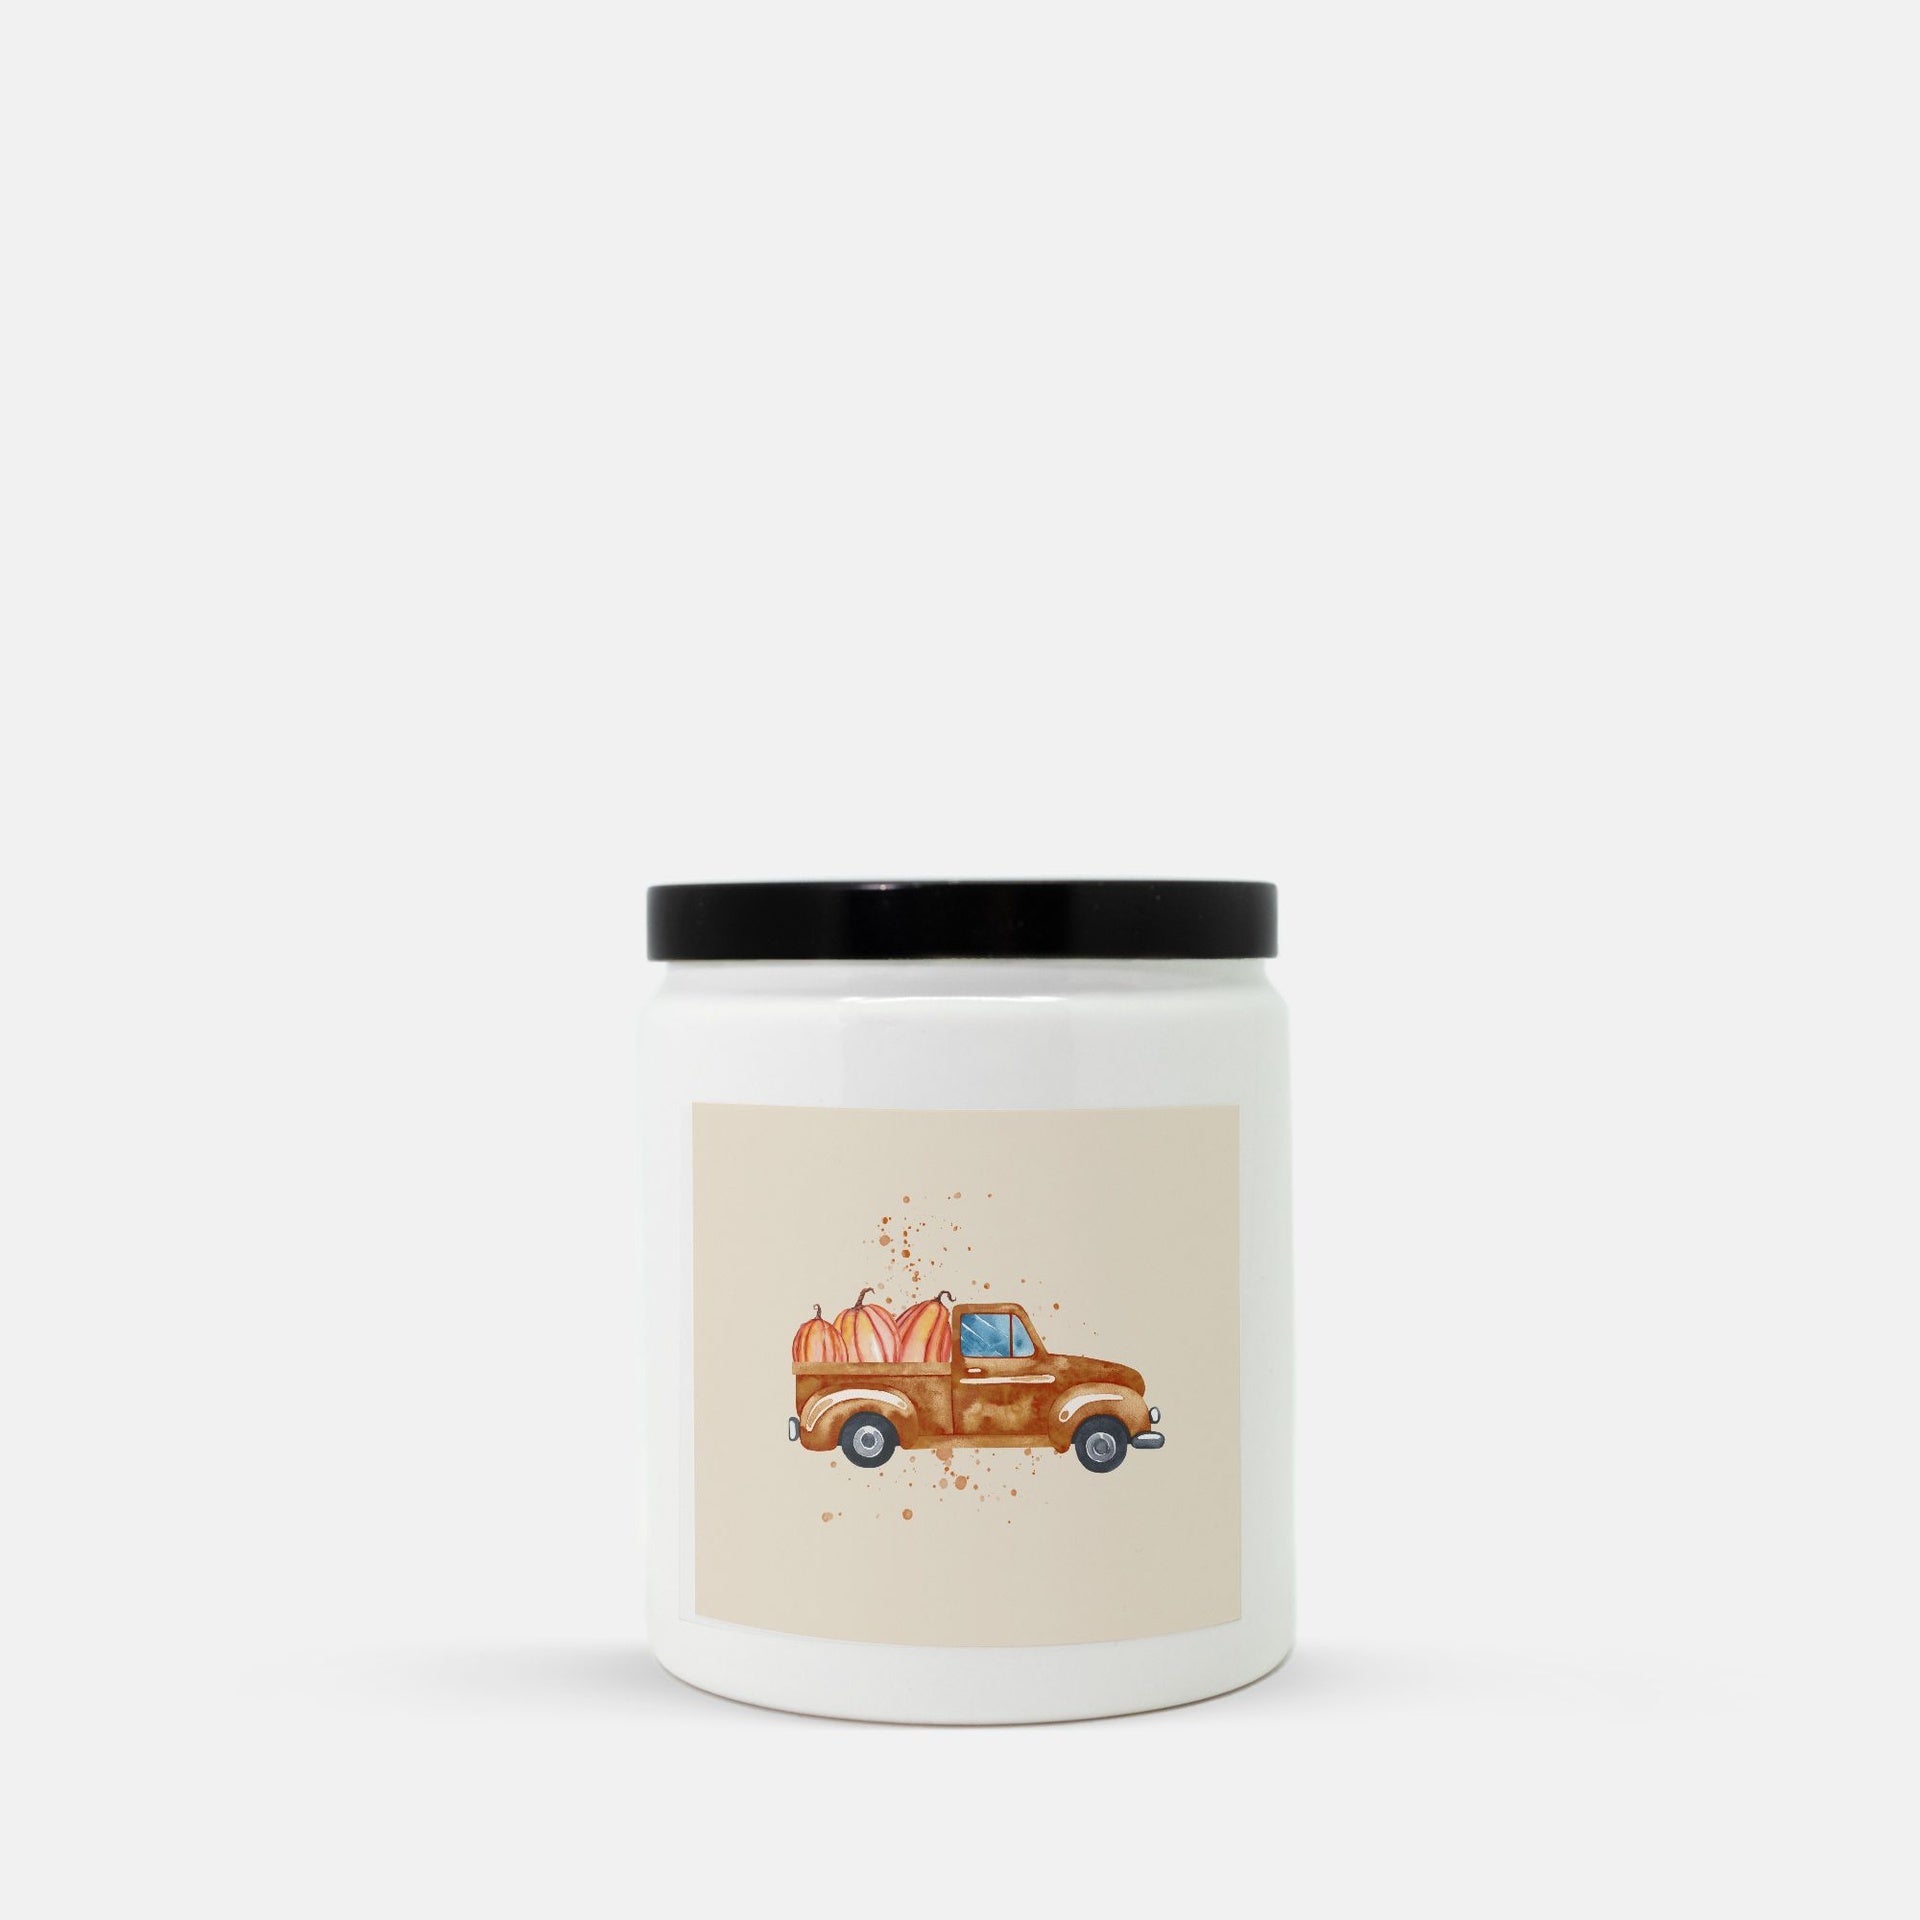 Lifestyle Details - Brown Rustic Truck & Pumpkins Ceramic Candle w Black Lid - Macintosh